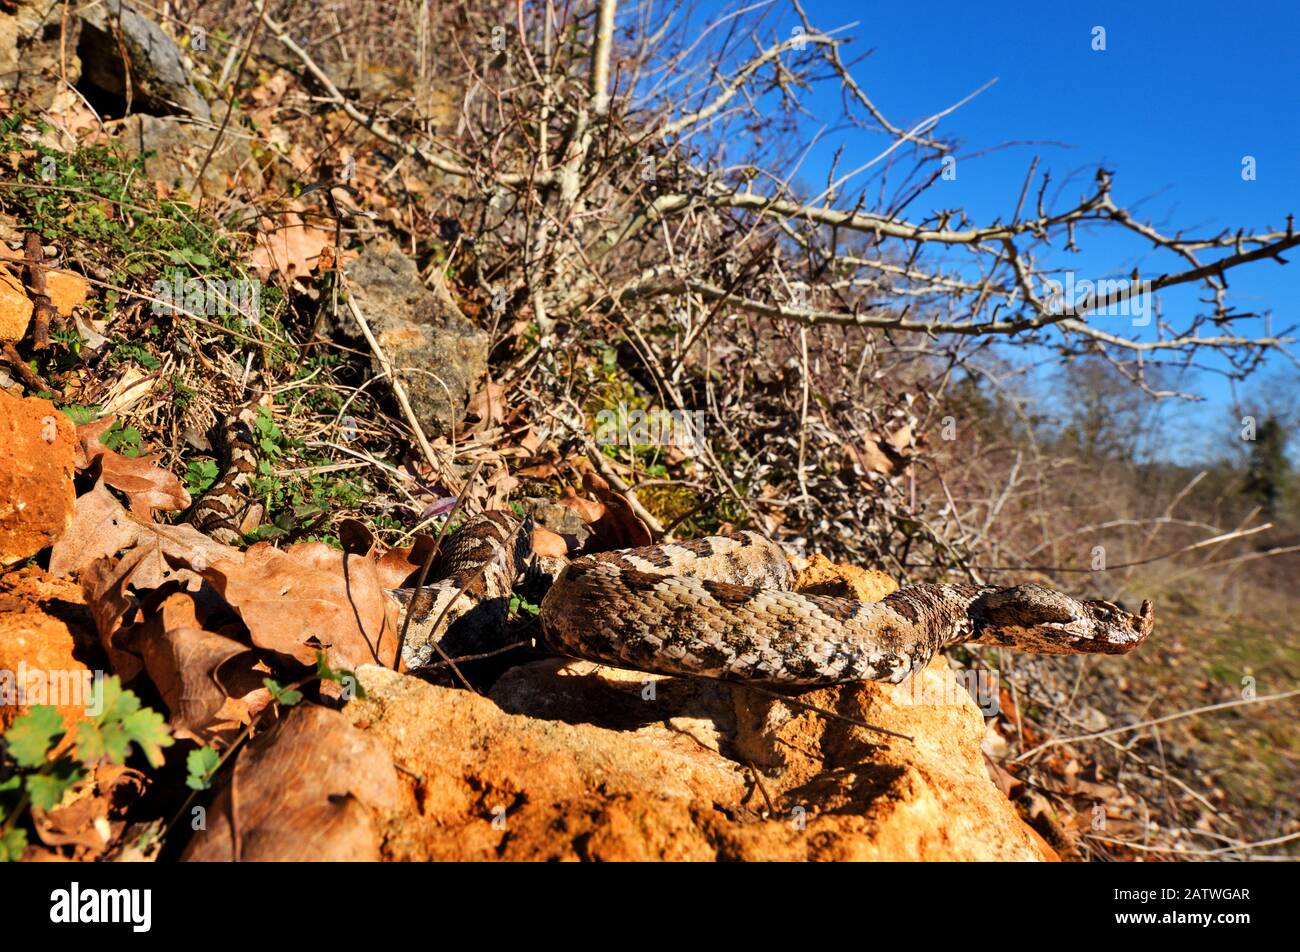 Horned viper (Vipera ammodytes) in natural setting, Turkey. Stock Photo